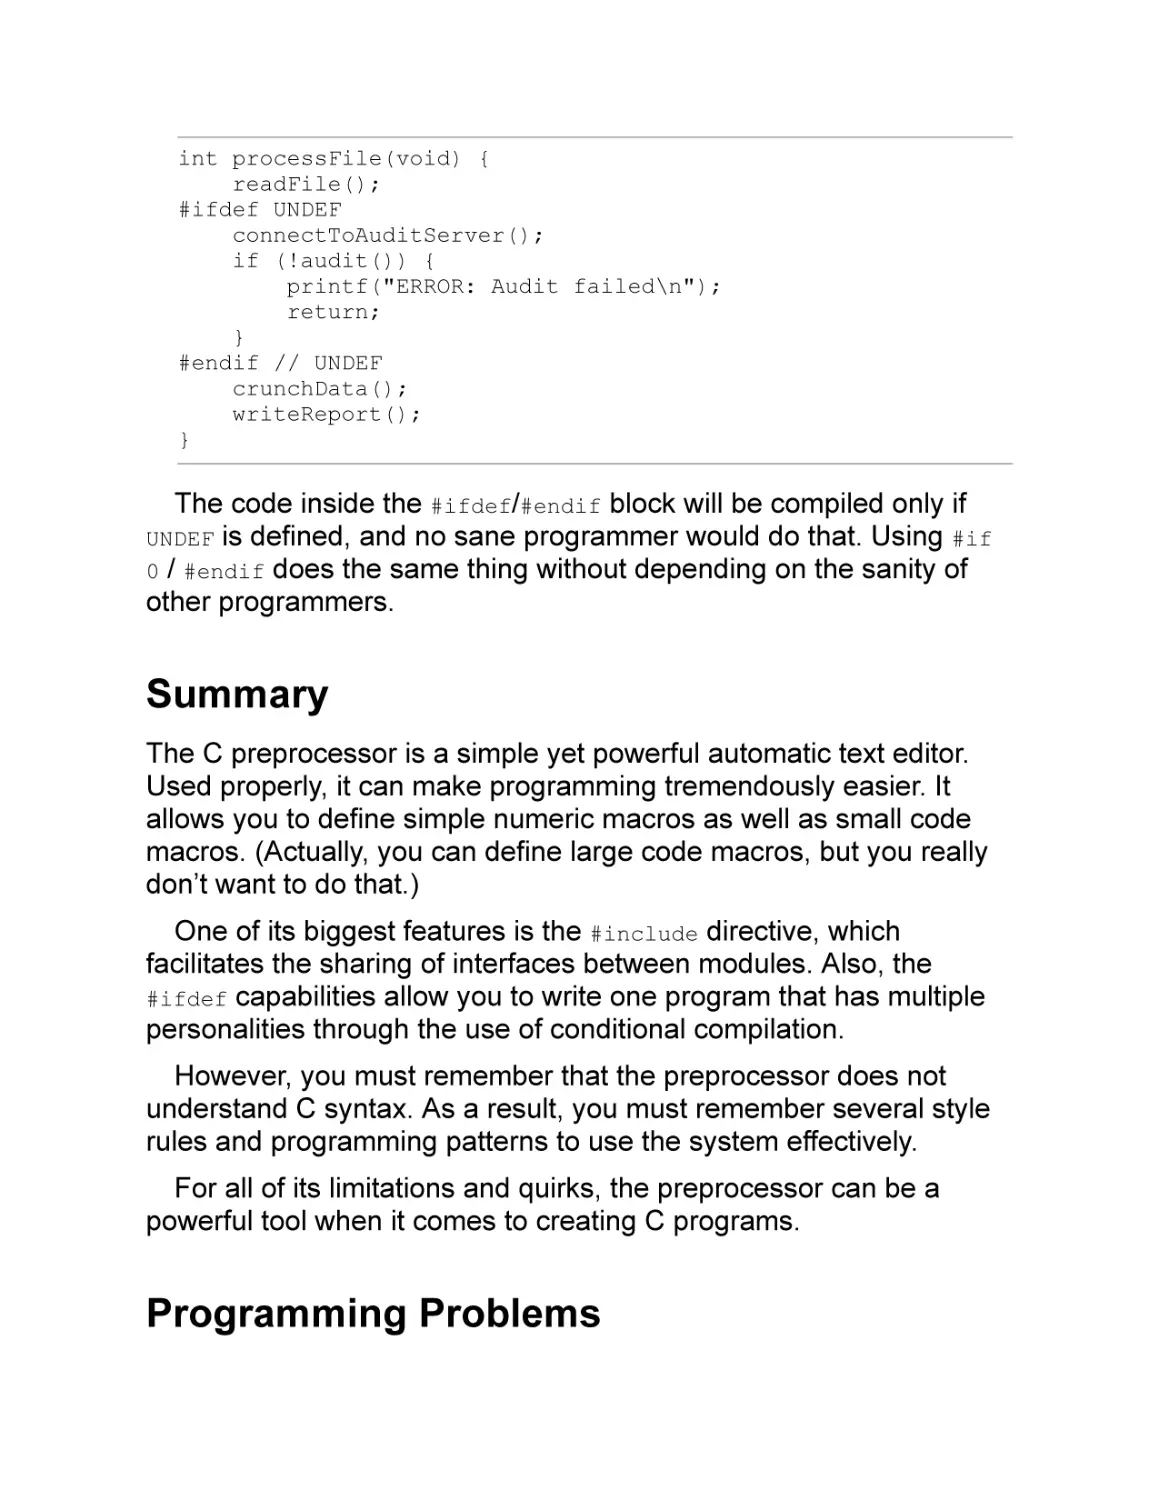 Summary
Programming Problems